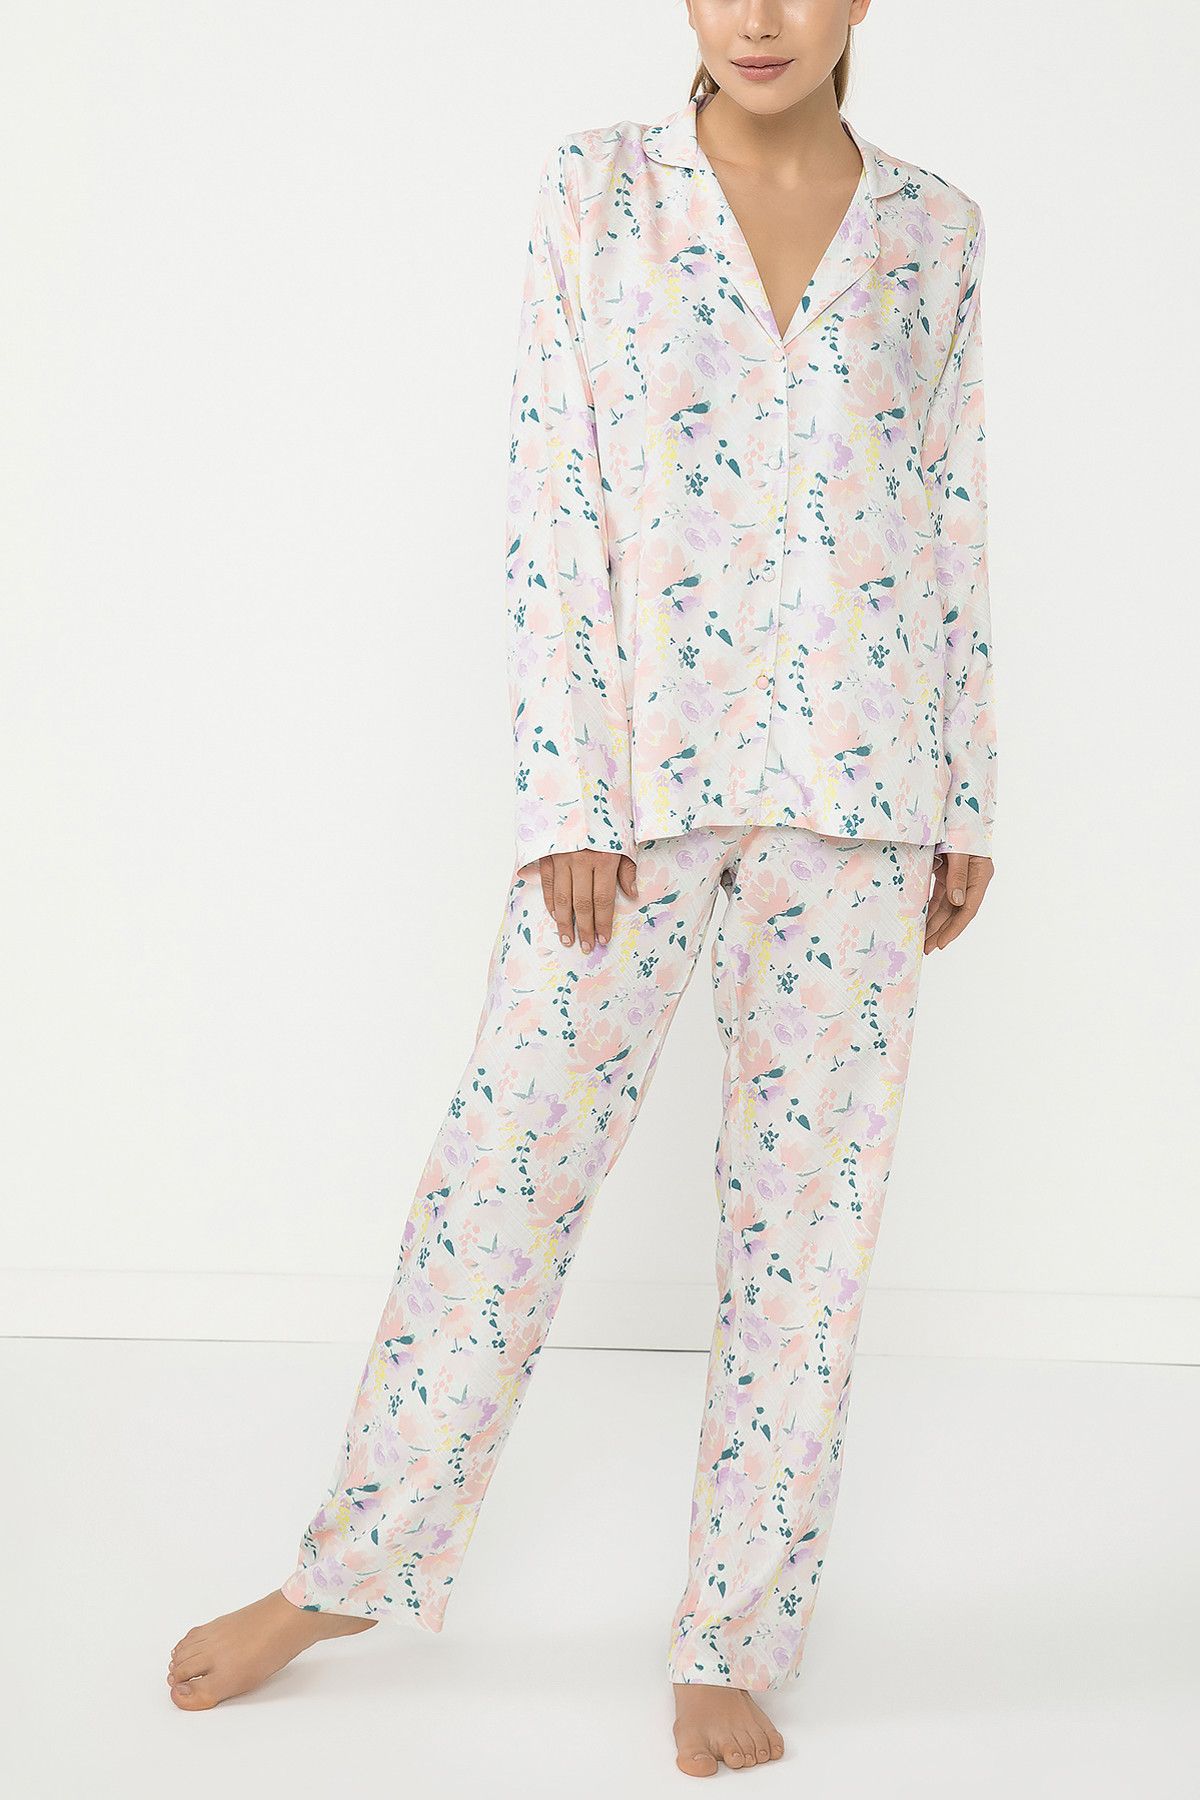 Penti Bouqet Pijama Takımı